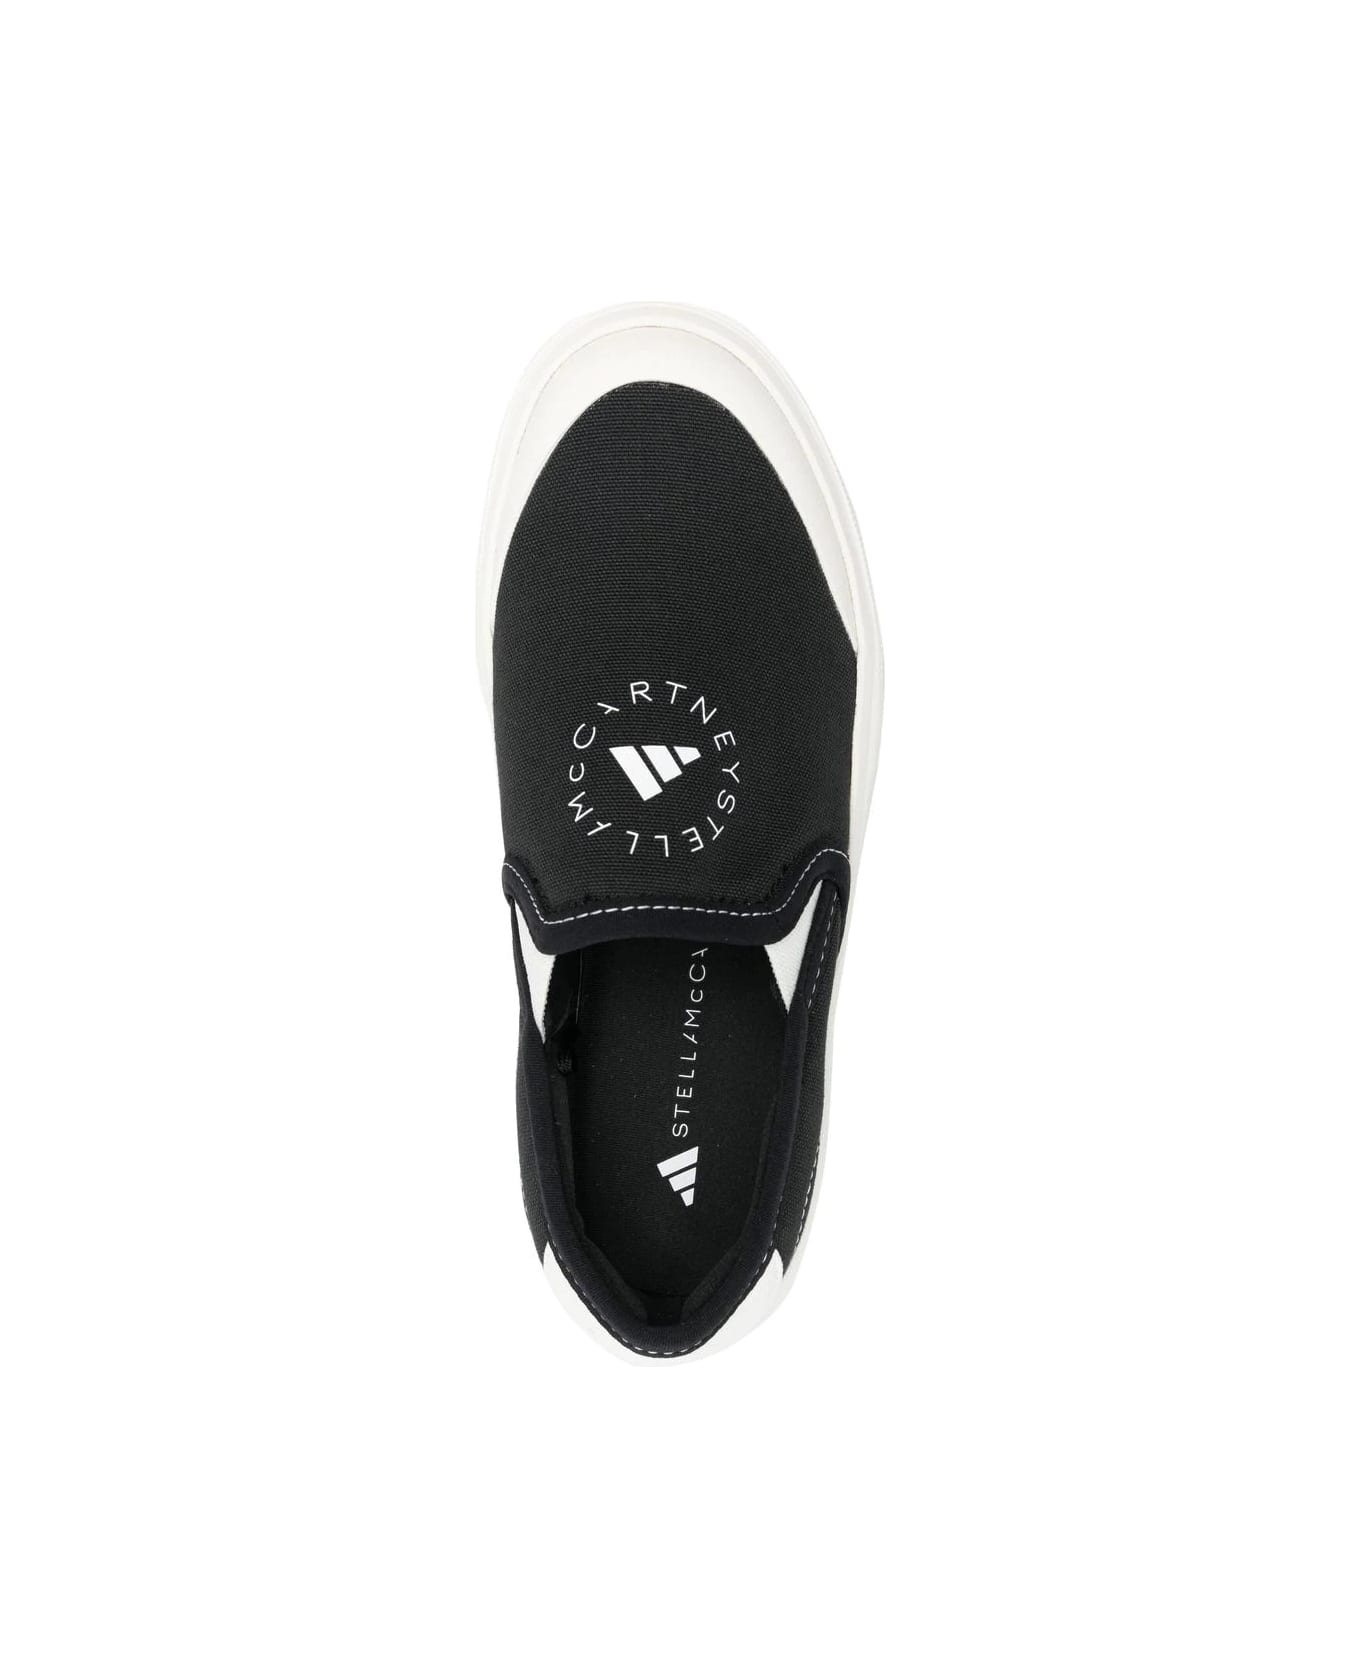 Adidas by Stella McCartney Court Slip-on Sneakers - Cblack Owhite Ftwwht スニーカー